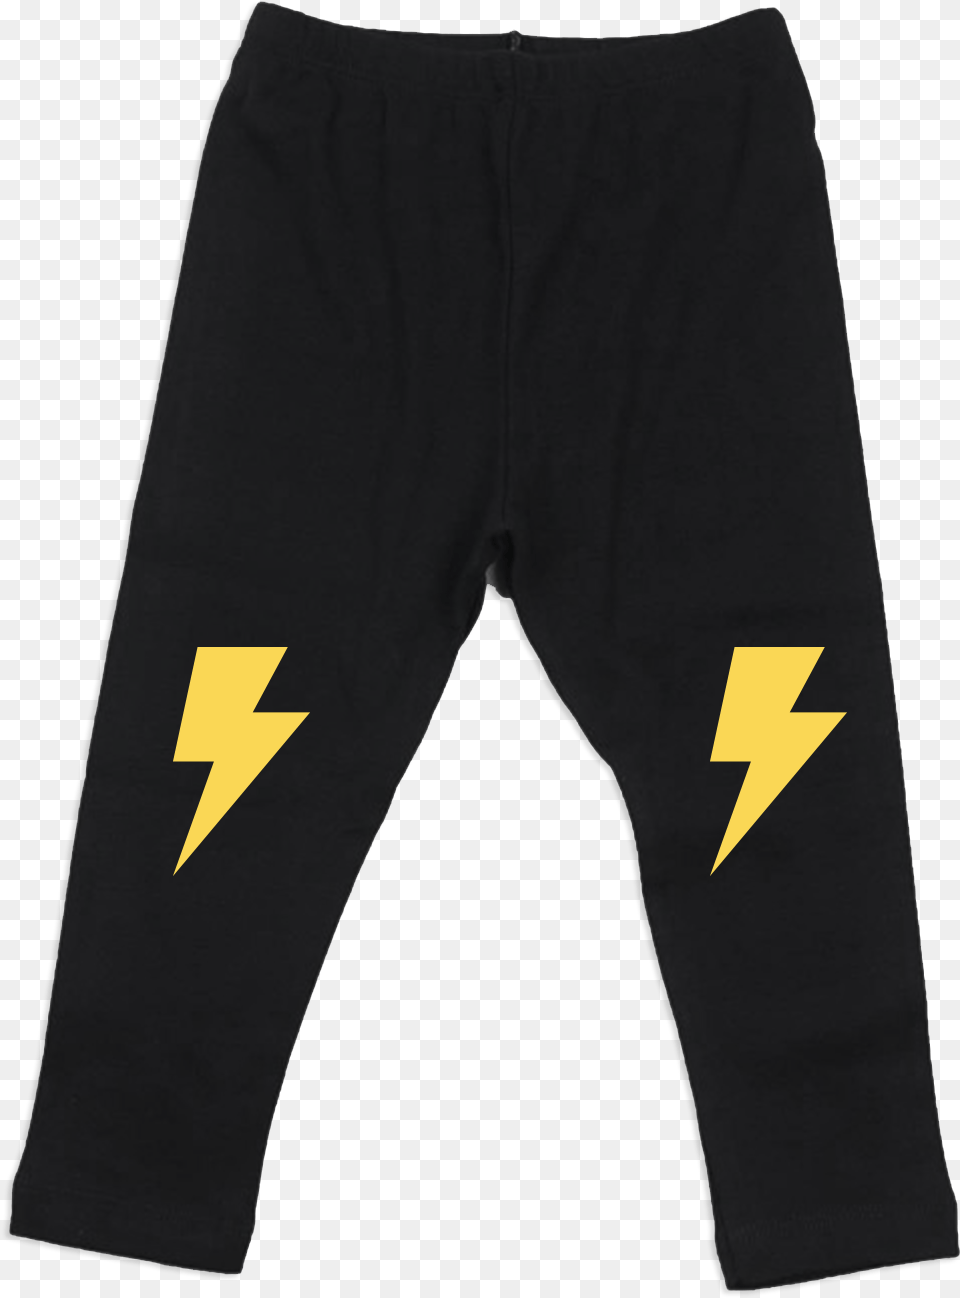 Lightning Bolt Leggings U2013 Whistle U0026 Flute Clothing Clothing, Pants, Shorts Free Png Download